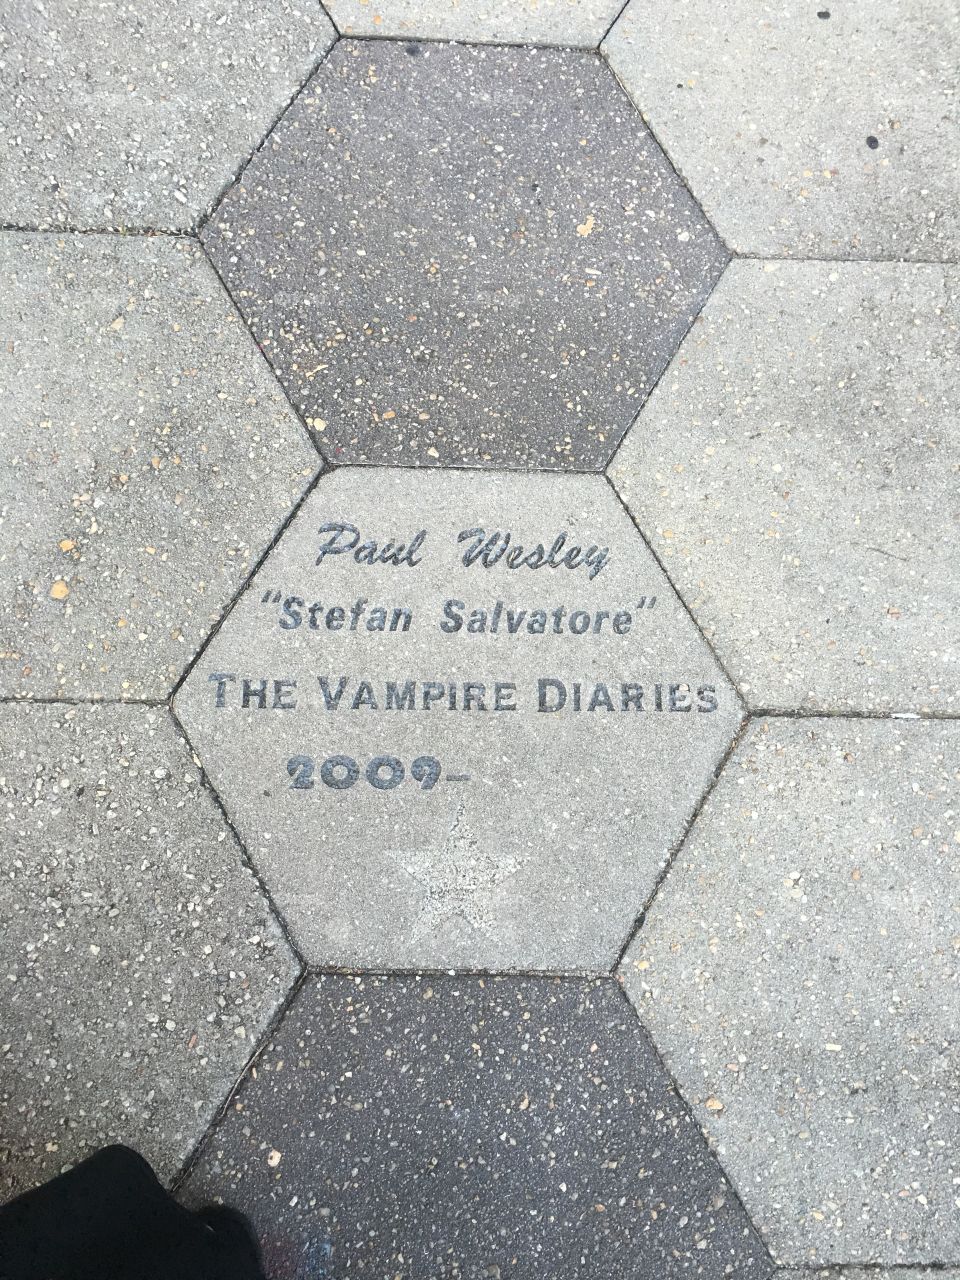 Stefan Salvatore stone. 